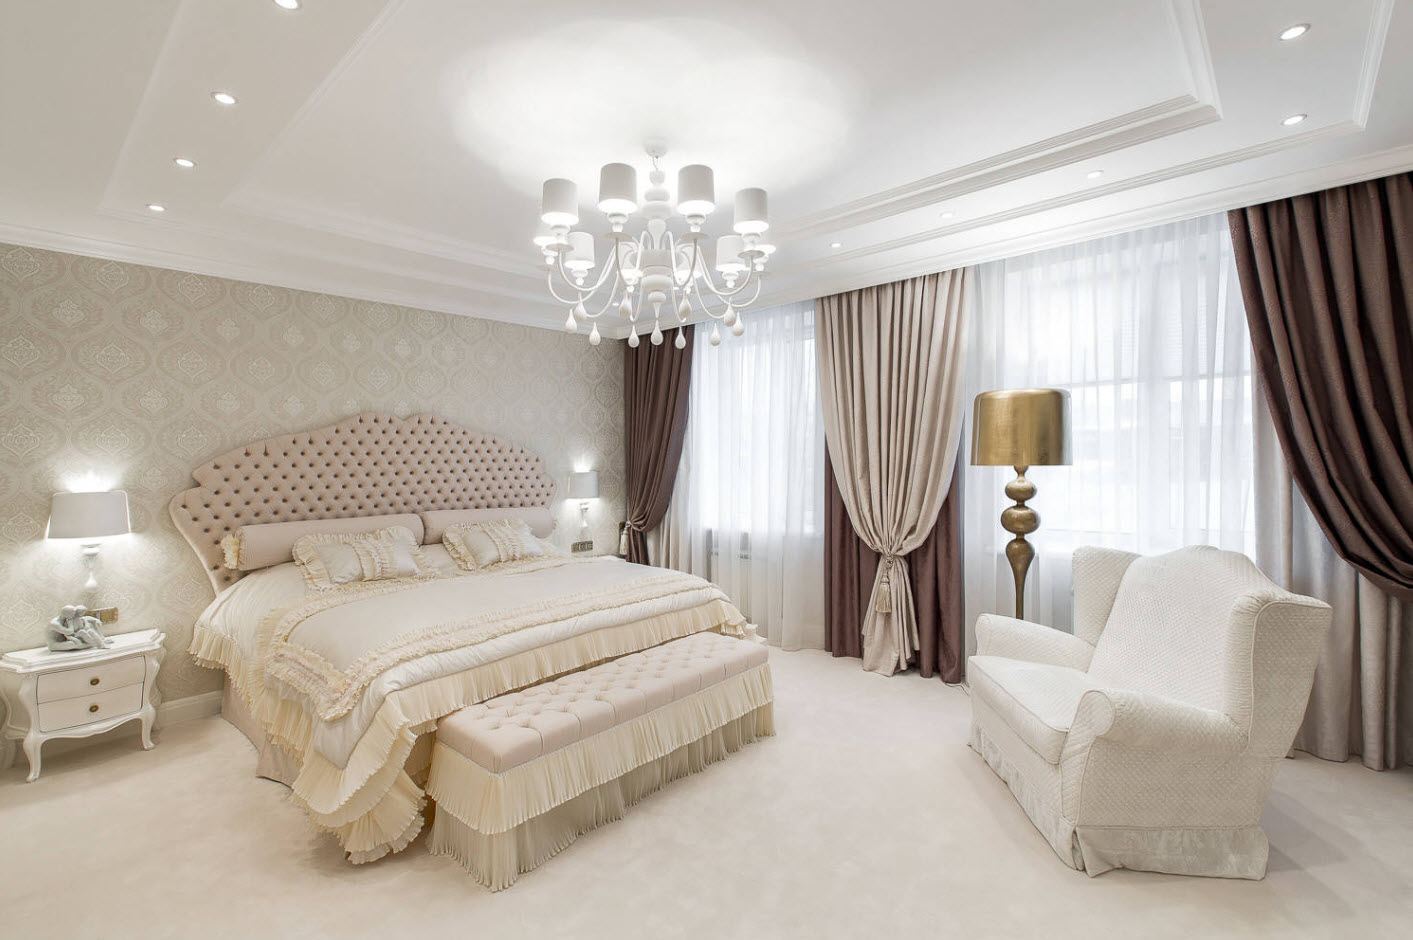 17 sqm bedroom design ideas